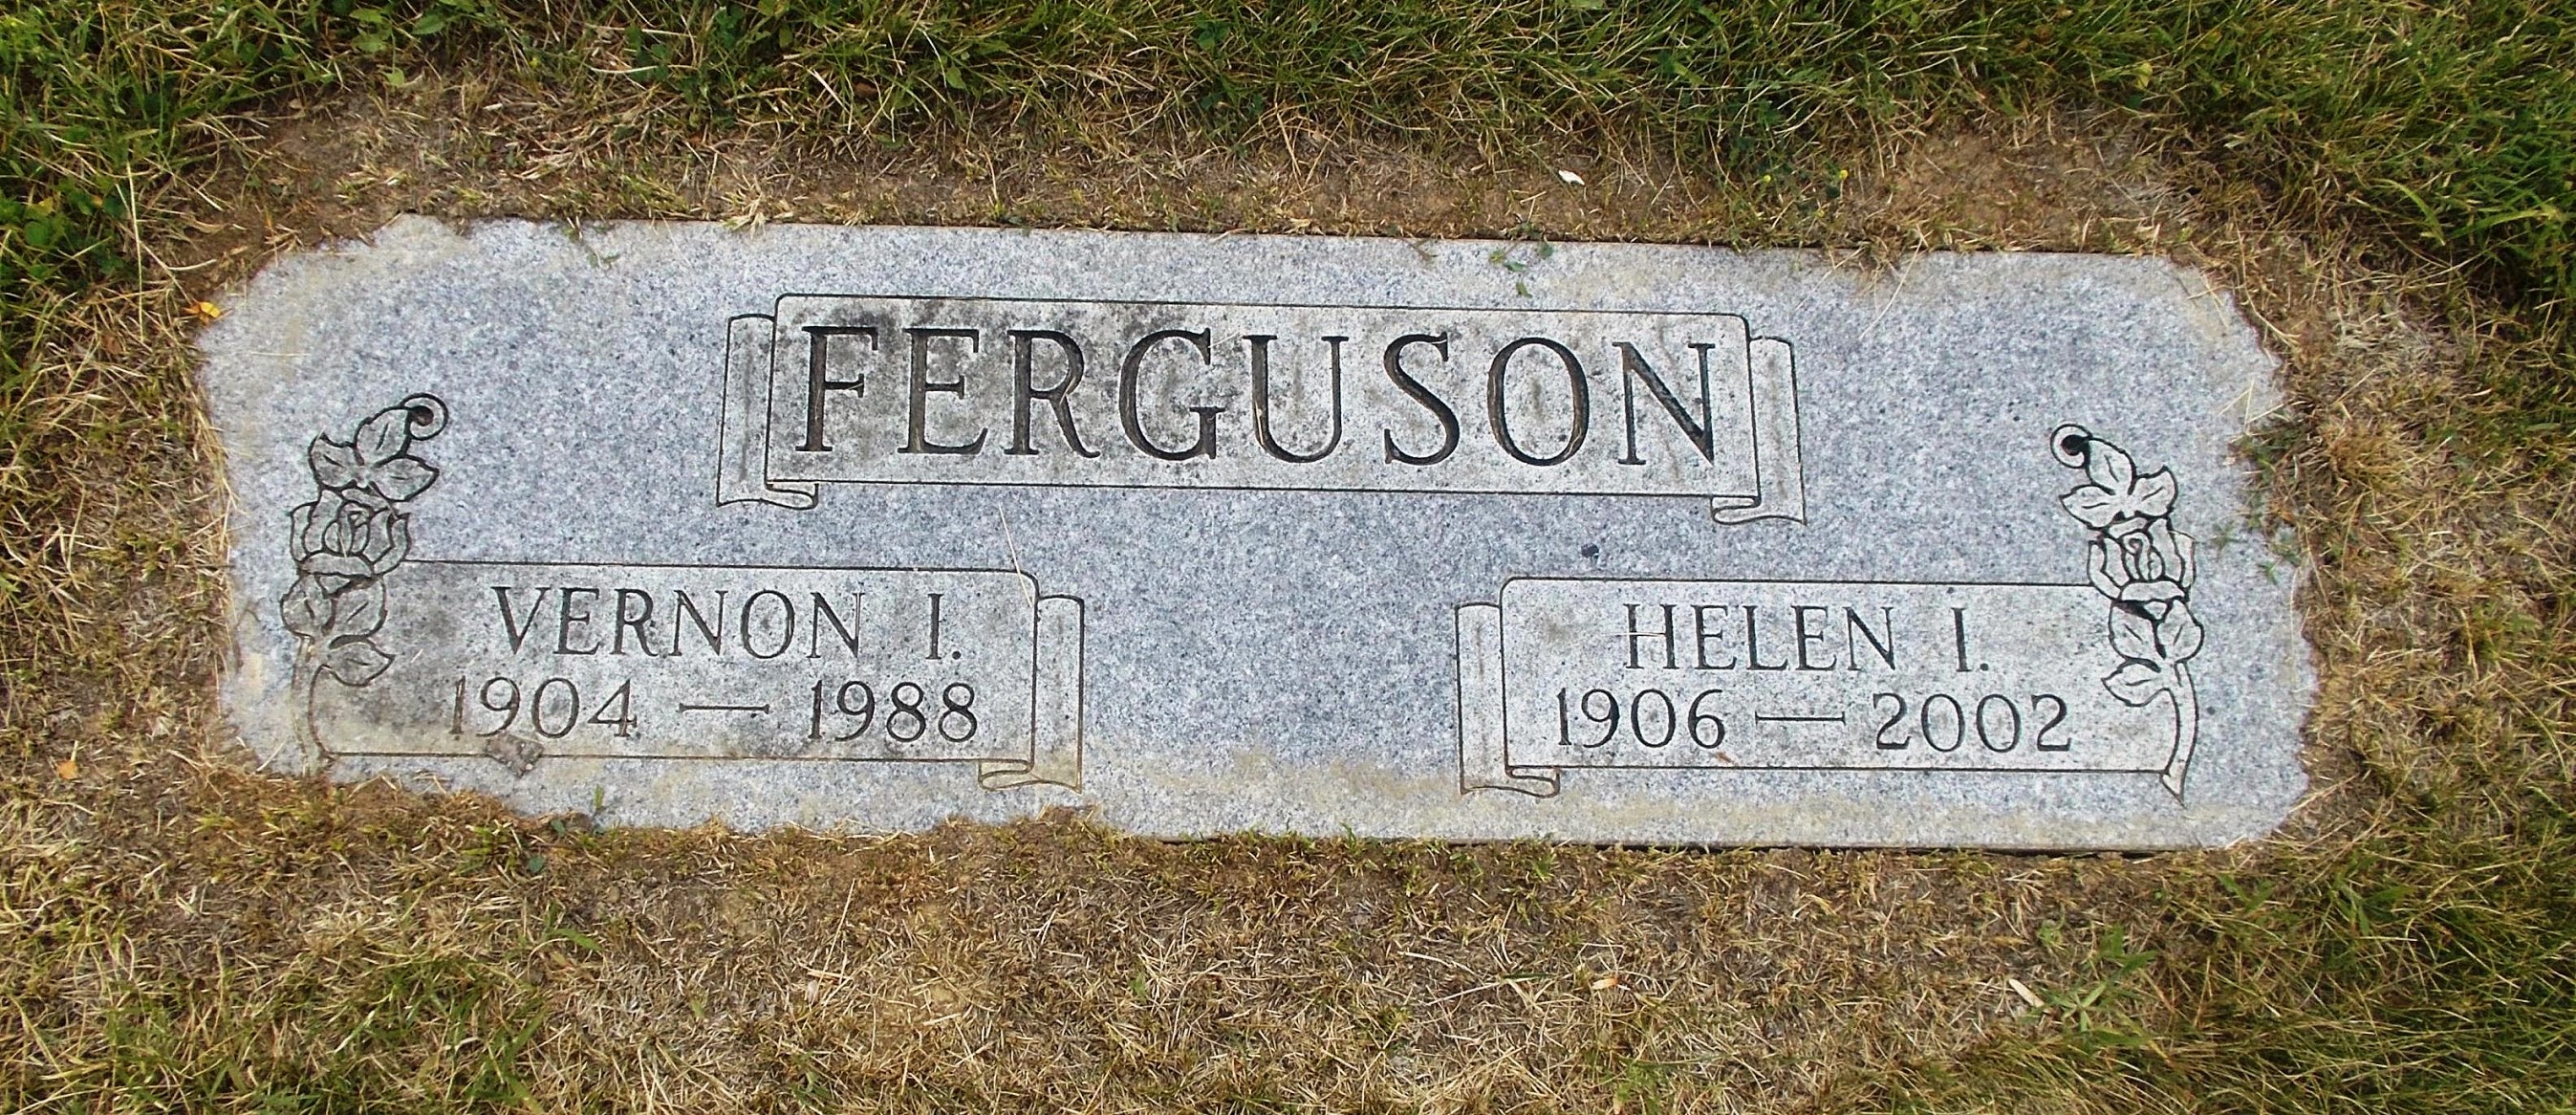 Vernon I Ferguson